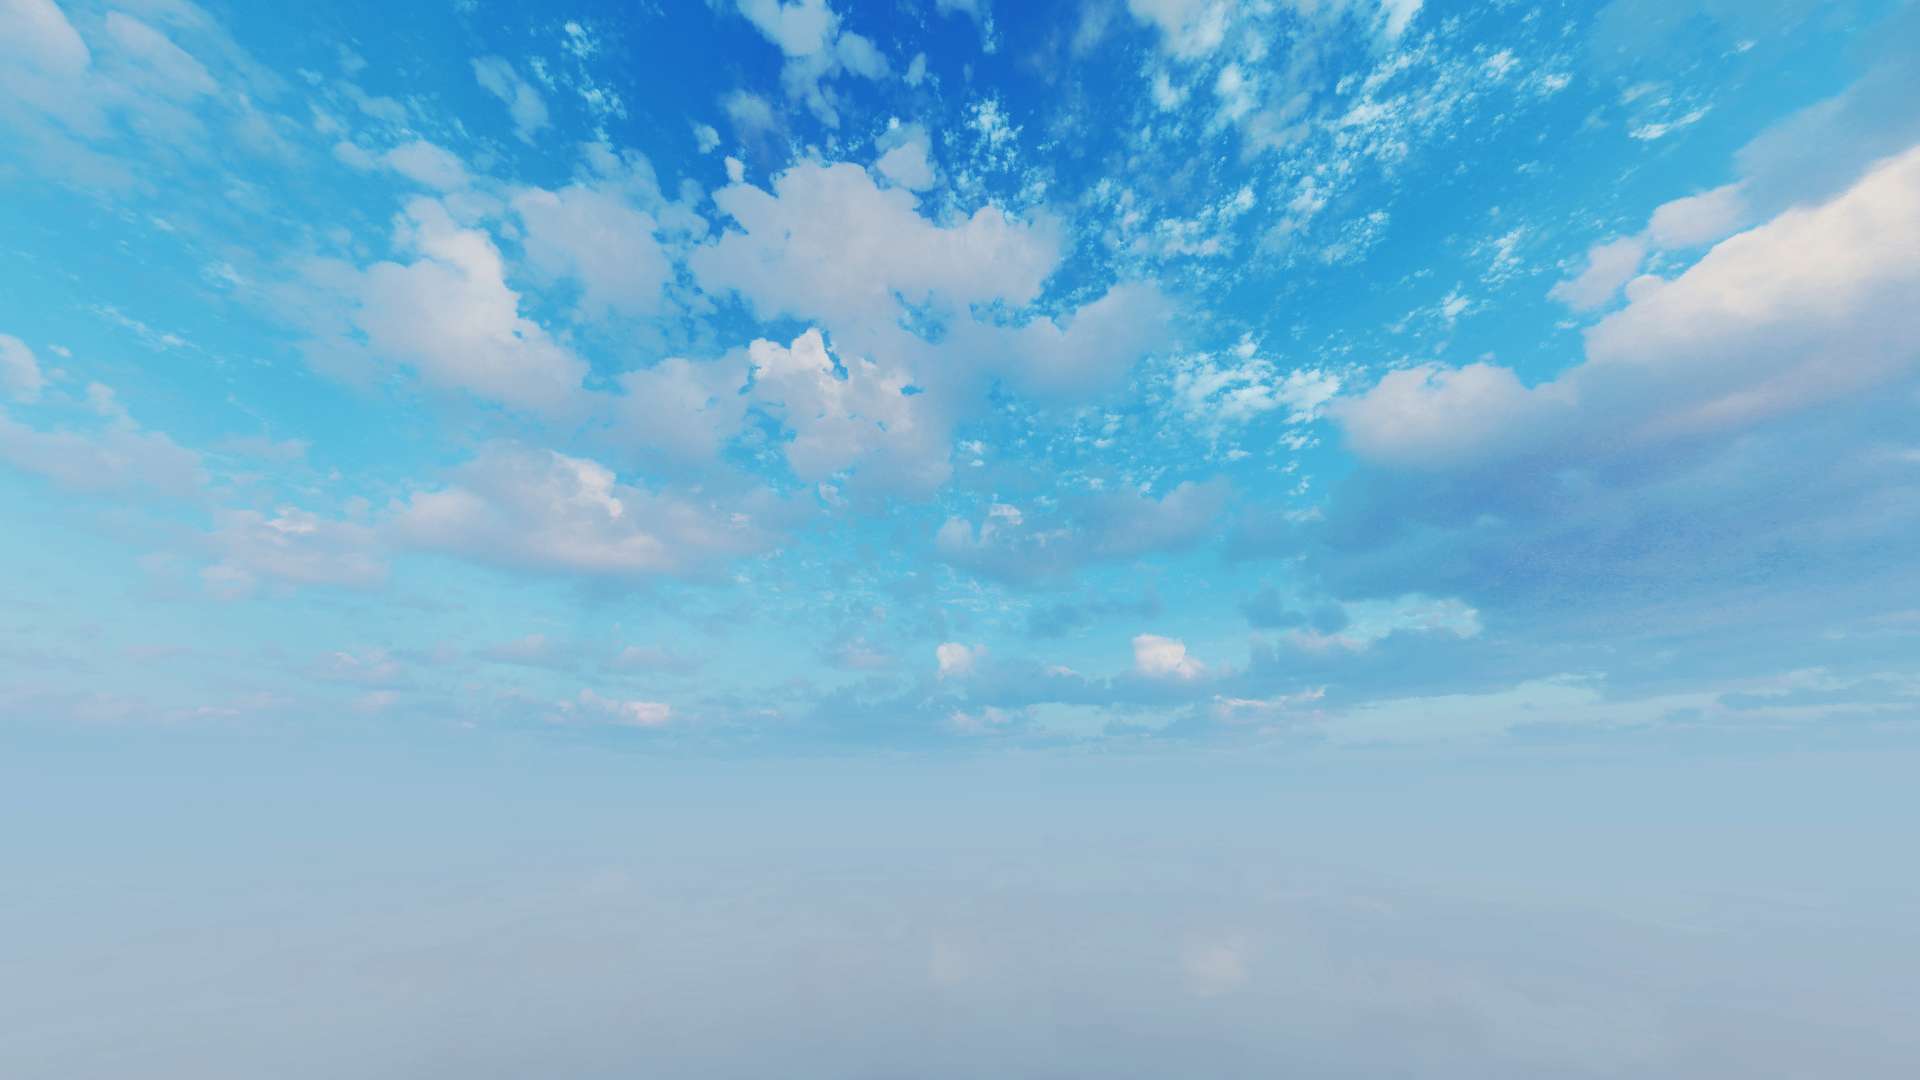 Aesthetic Blue Sky 16x by Yuruze on PvPRP